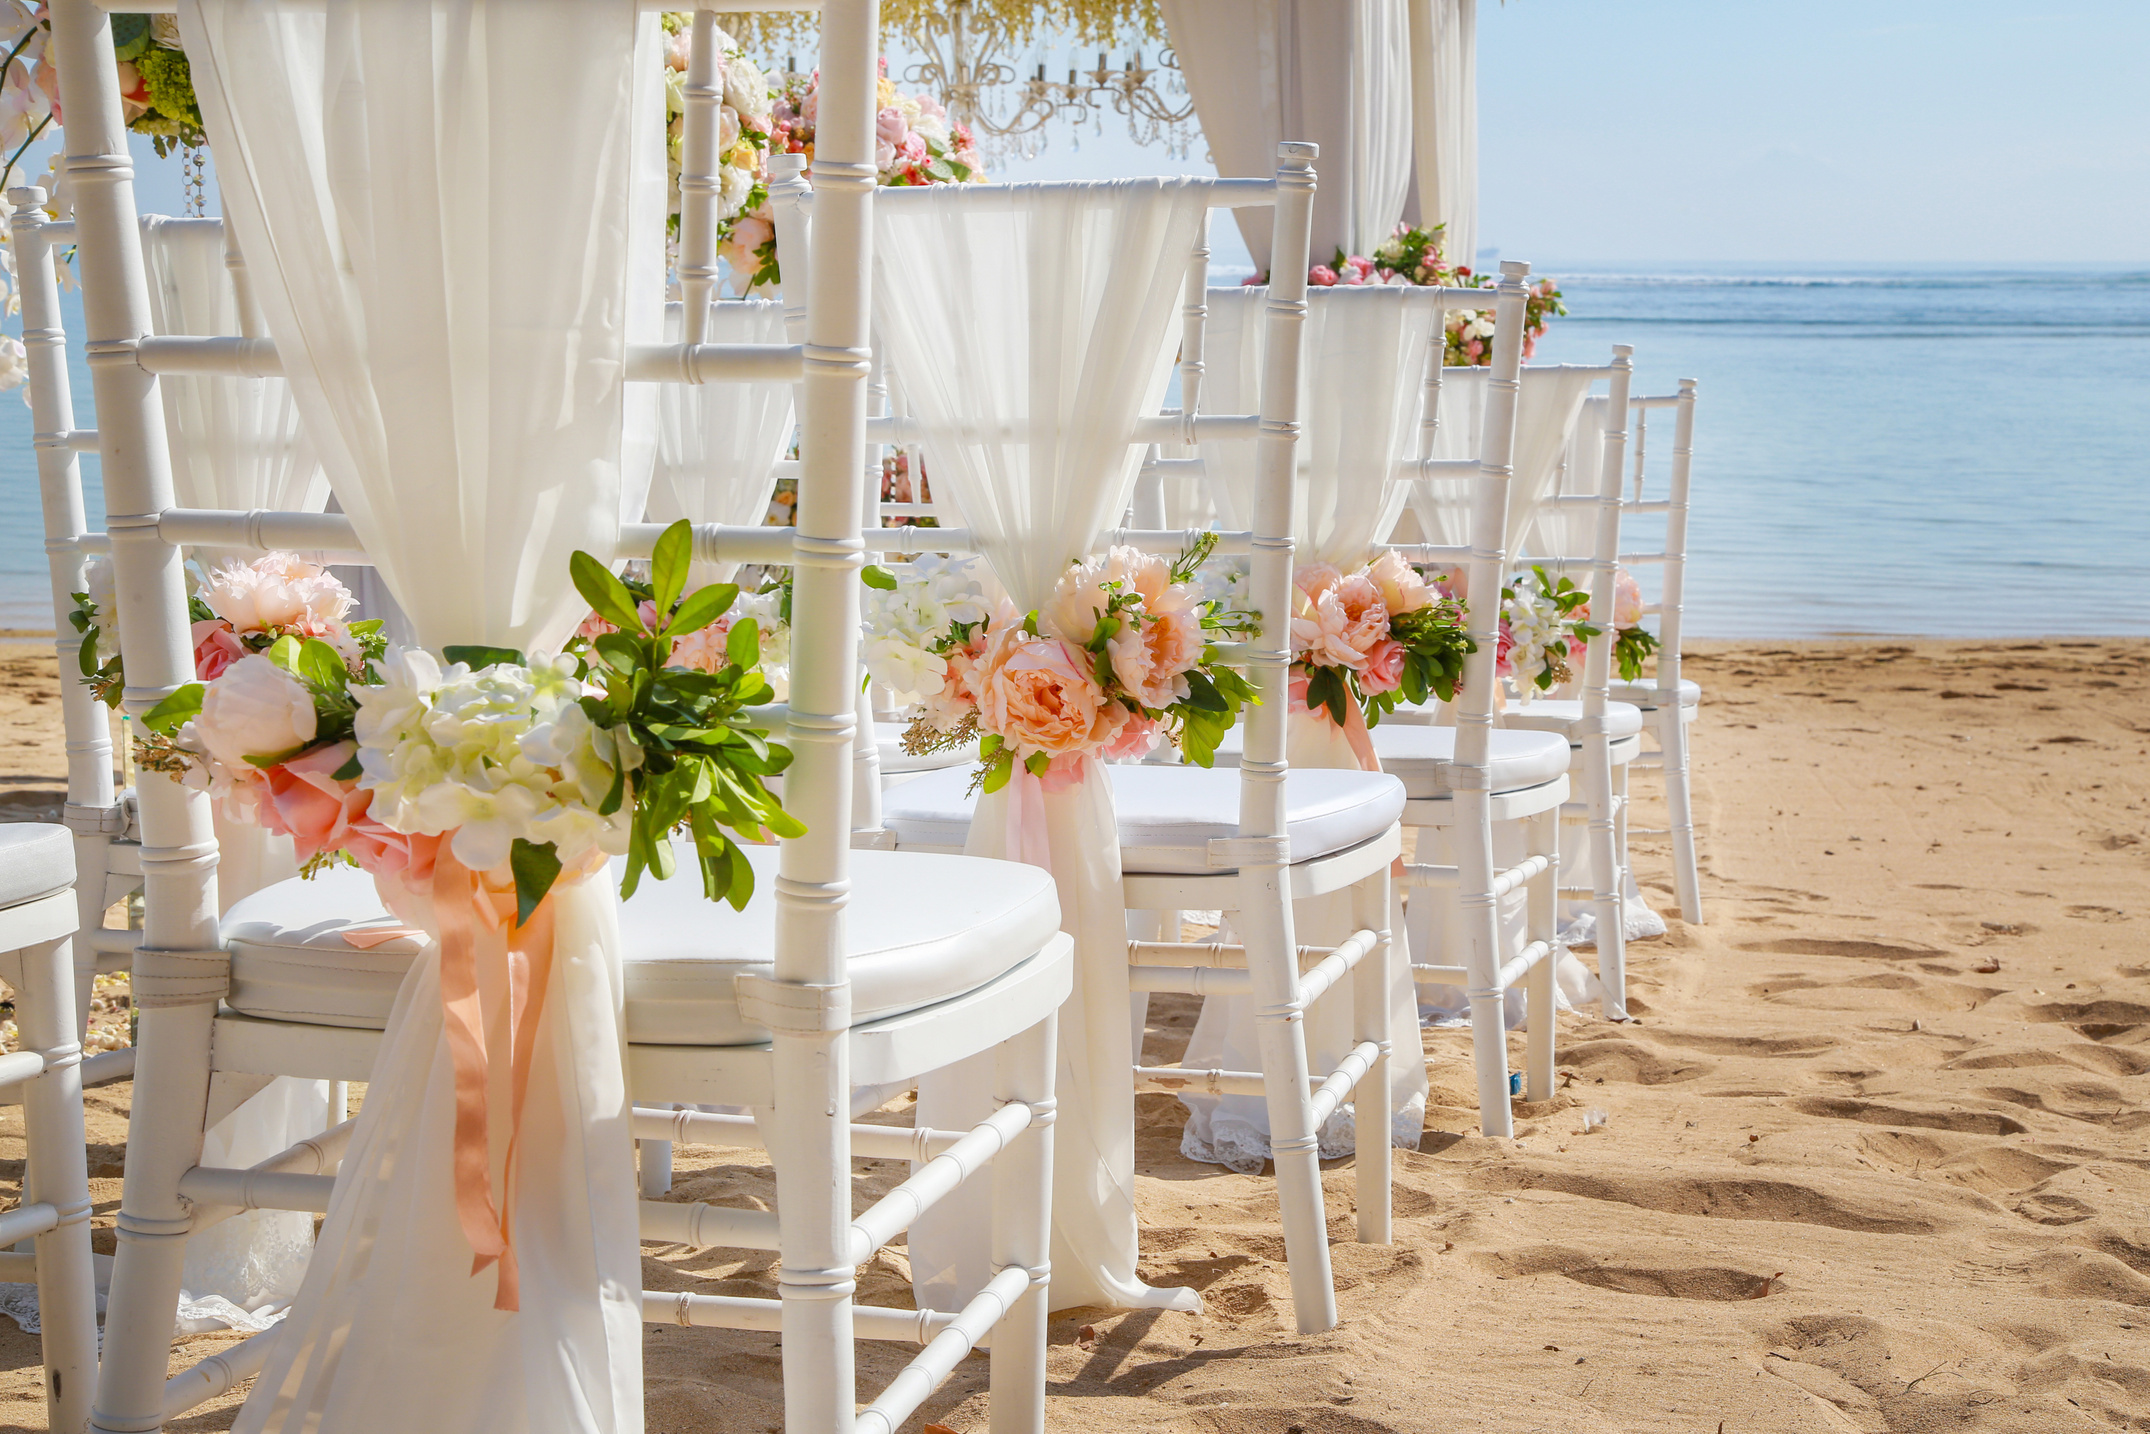 Wedding set up on beach. Beautiful tropical outdoor wedding party on beach